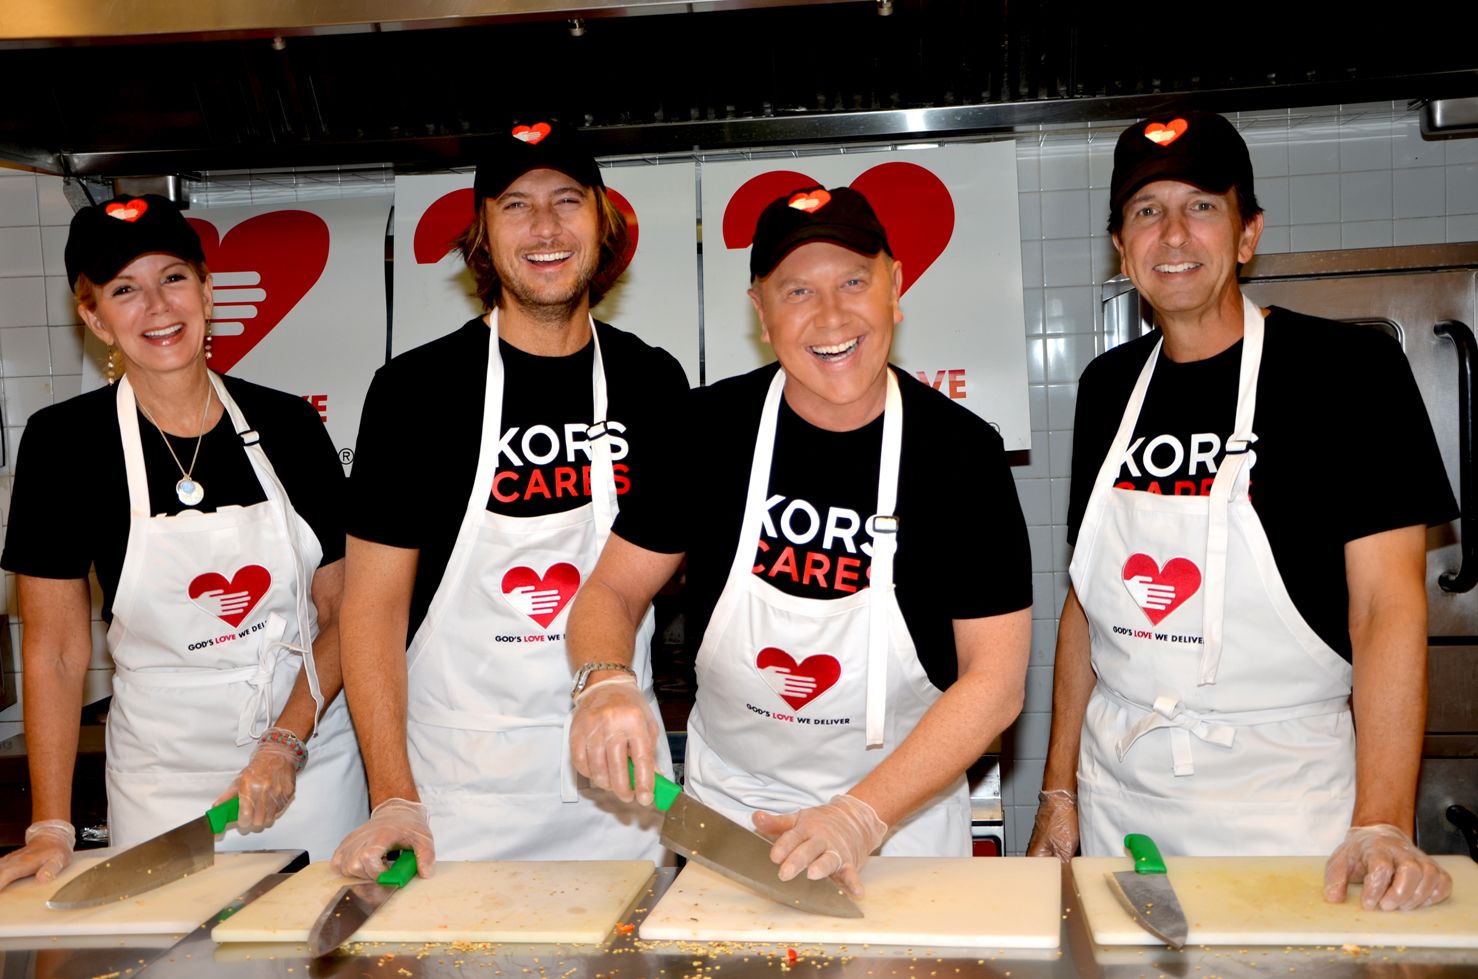 Michael Kors, Halle Berry team up to fight world hunger | CNN